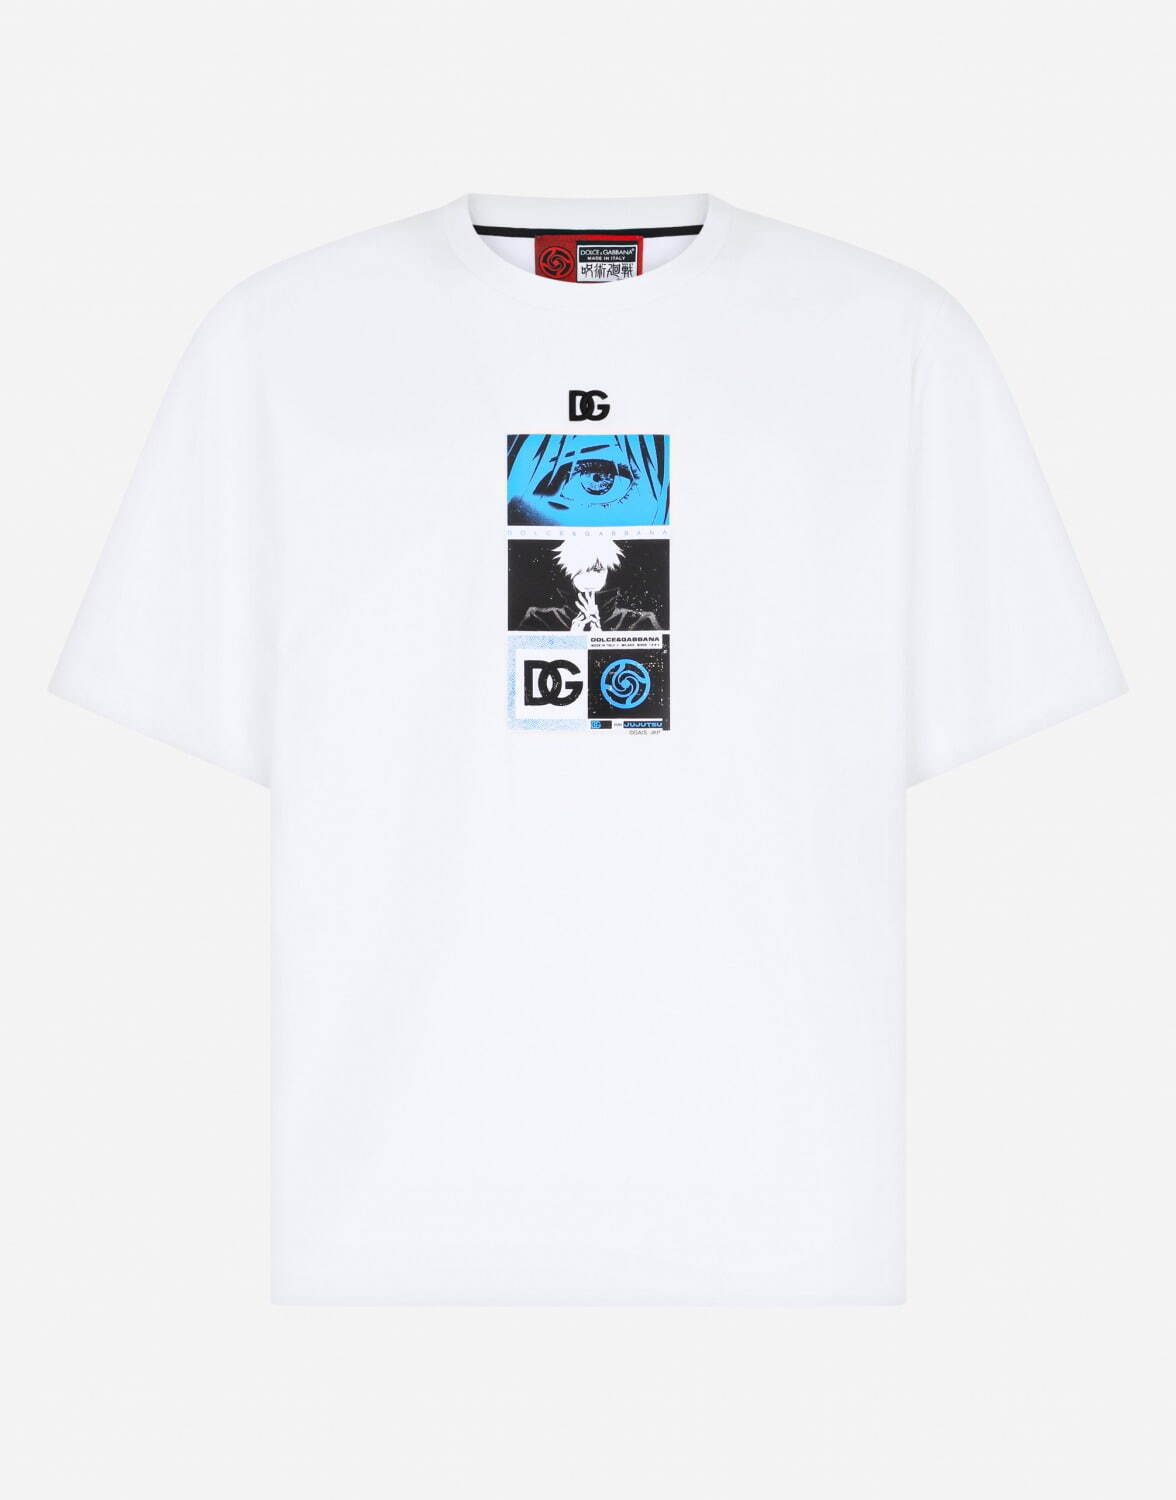 Tシャツ“五条悟” 90,200円